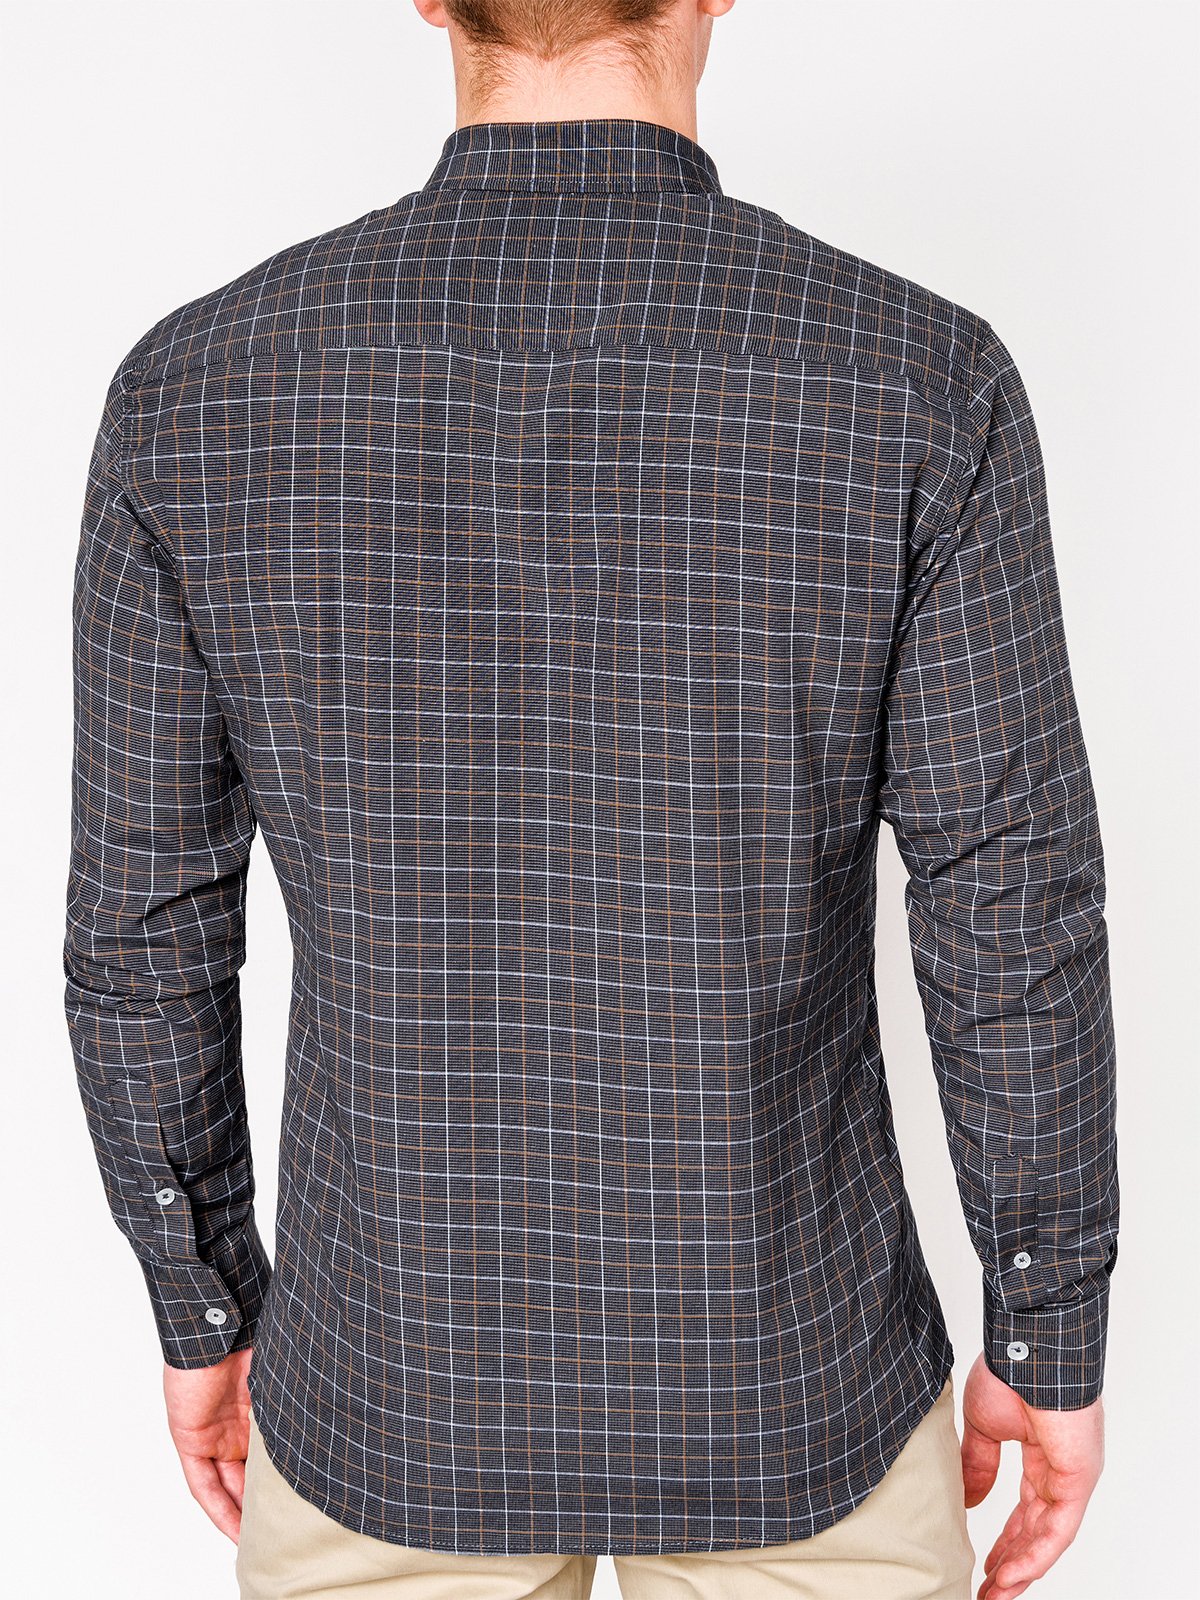 Men's check shirt with long sleeves K425 - dark grey | MODONE wholesale ...